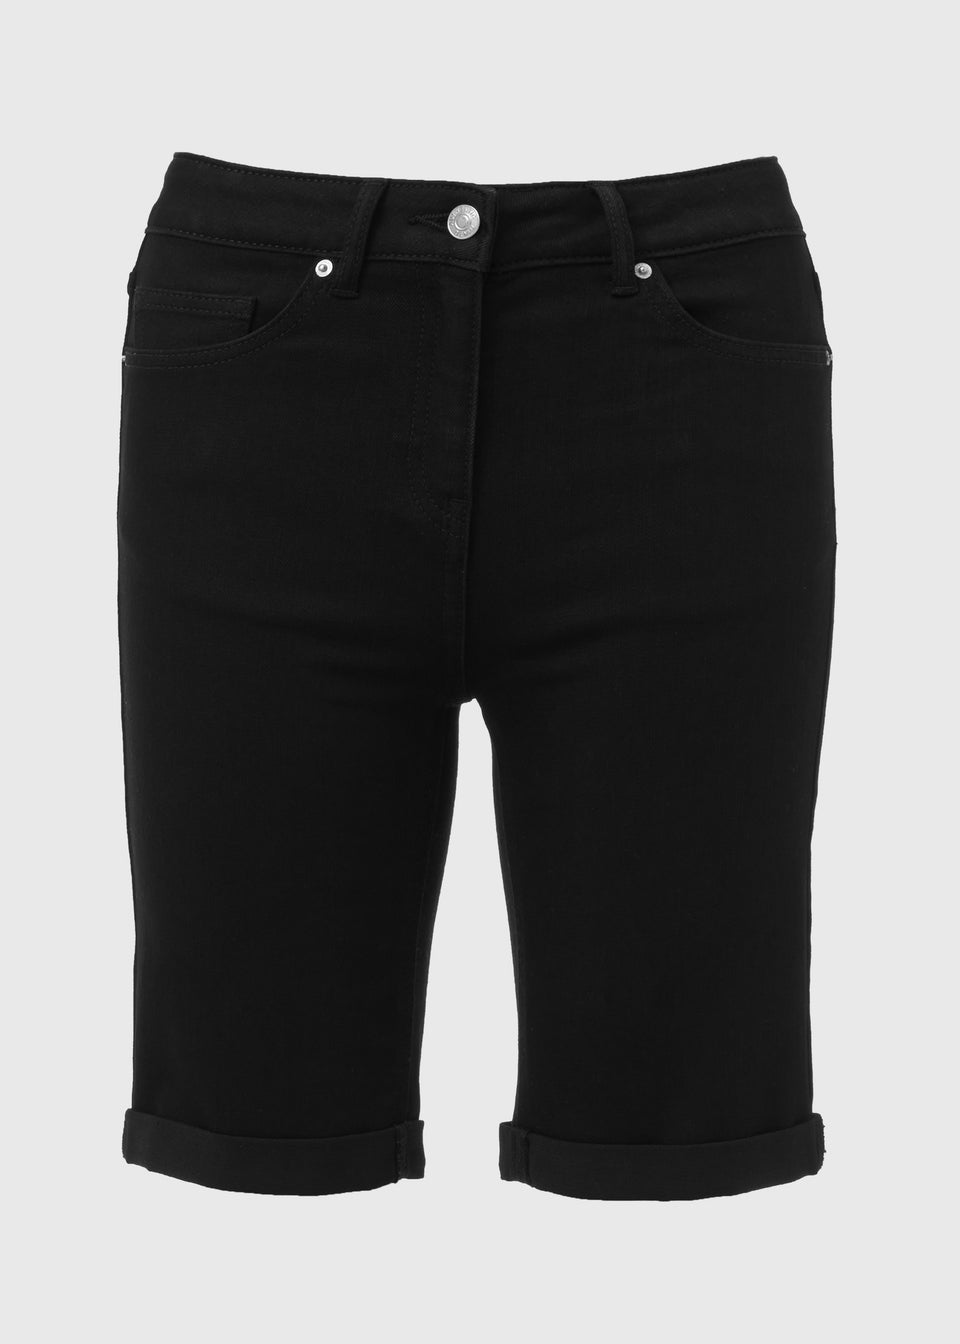 Black Knee Length Shorts